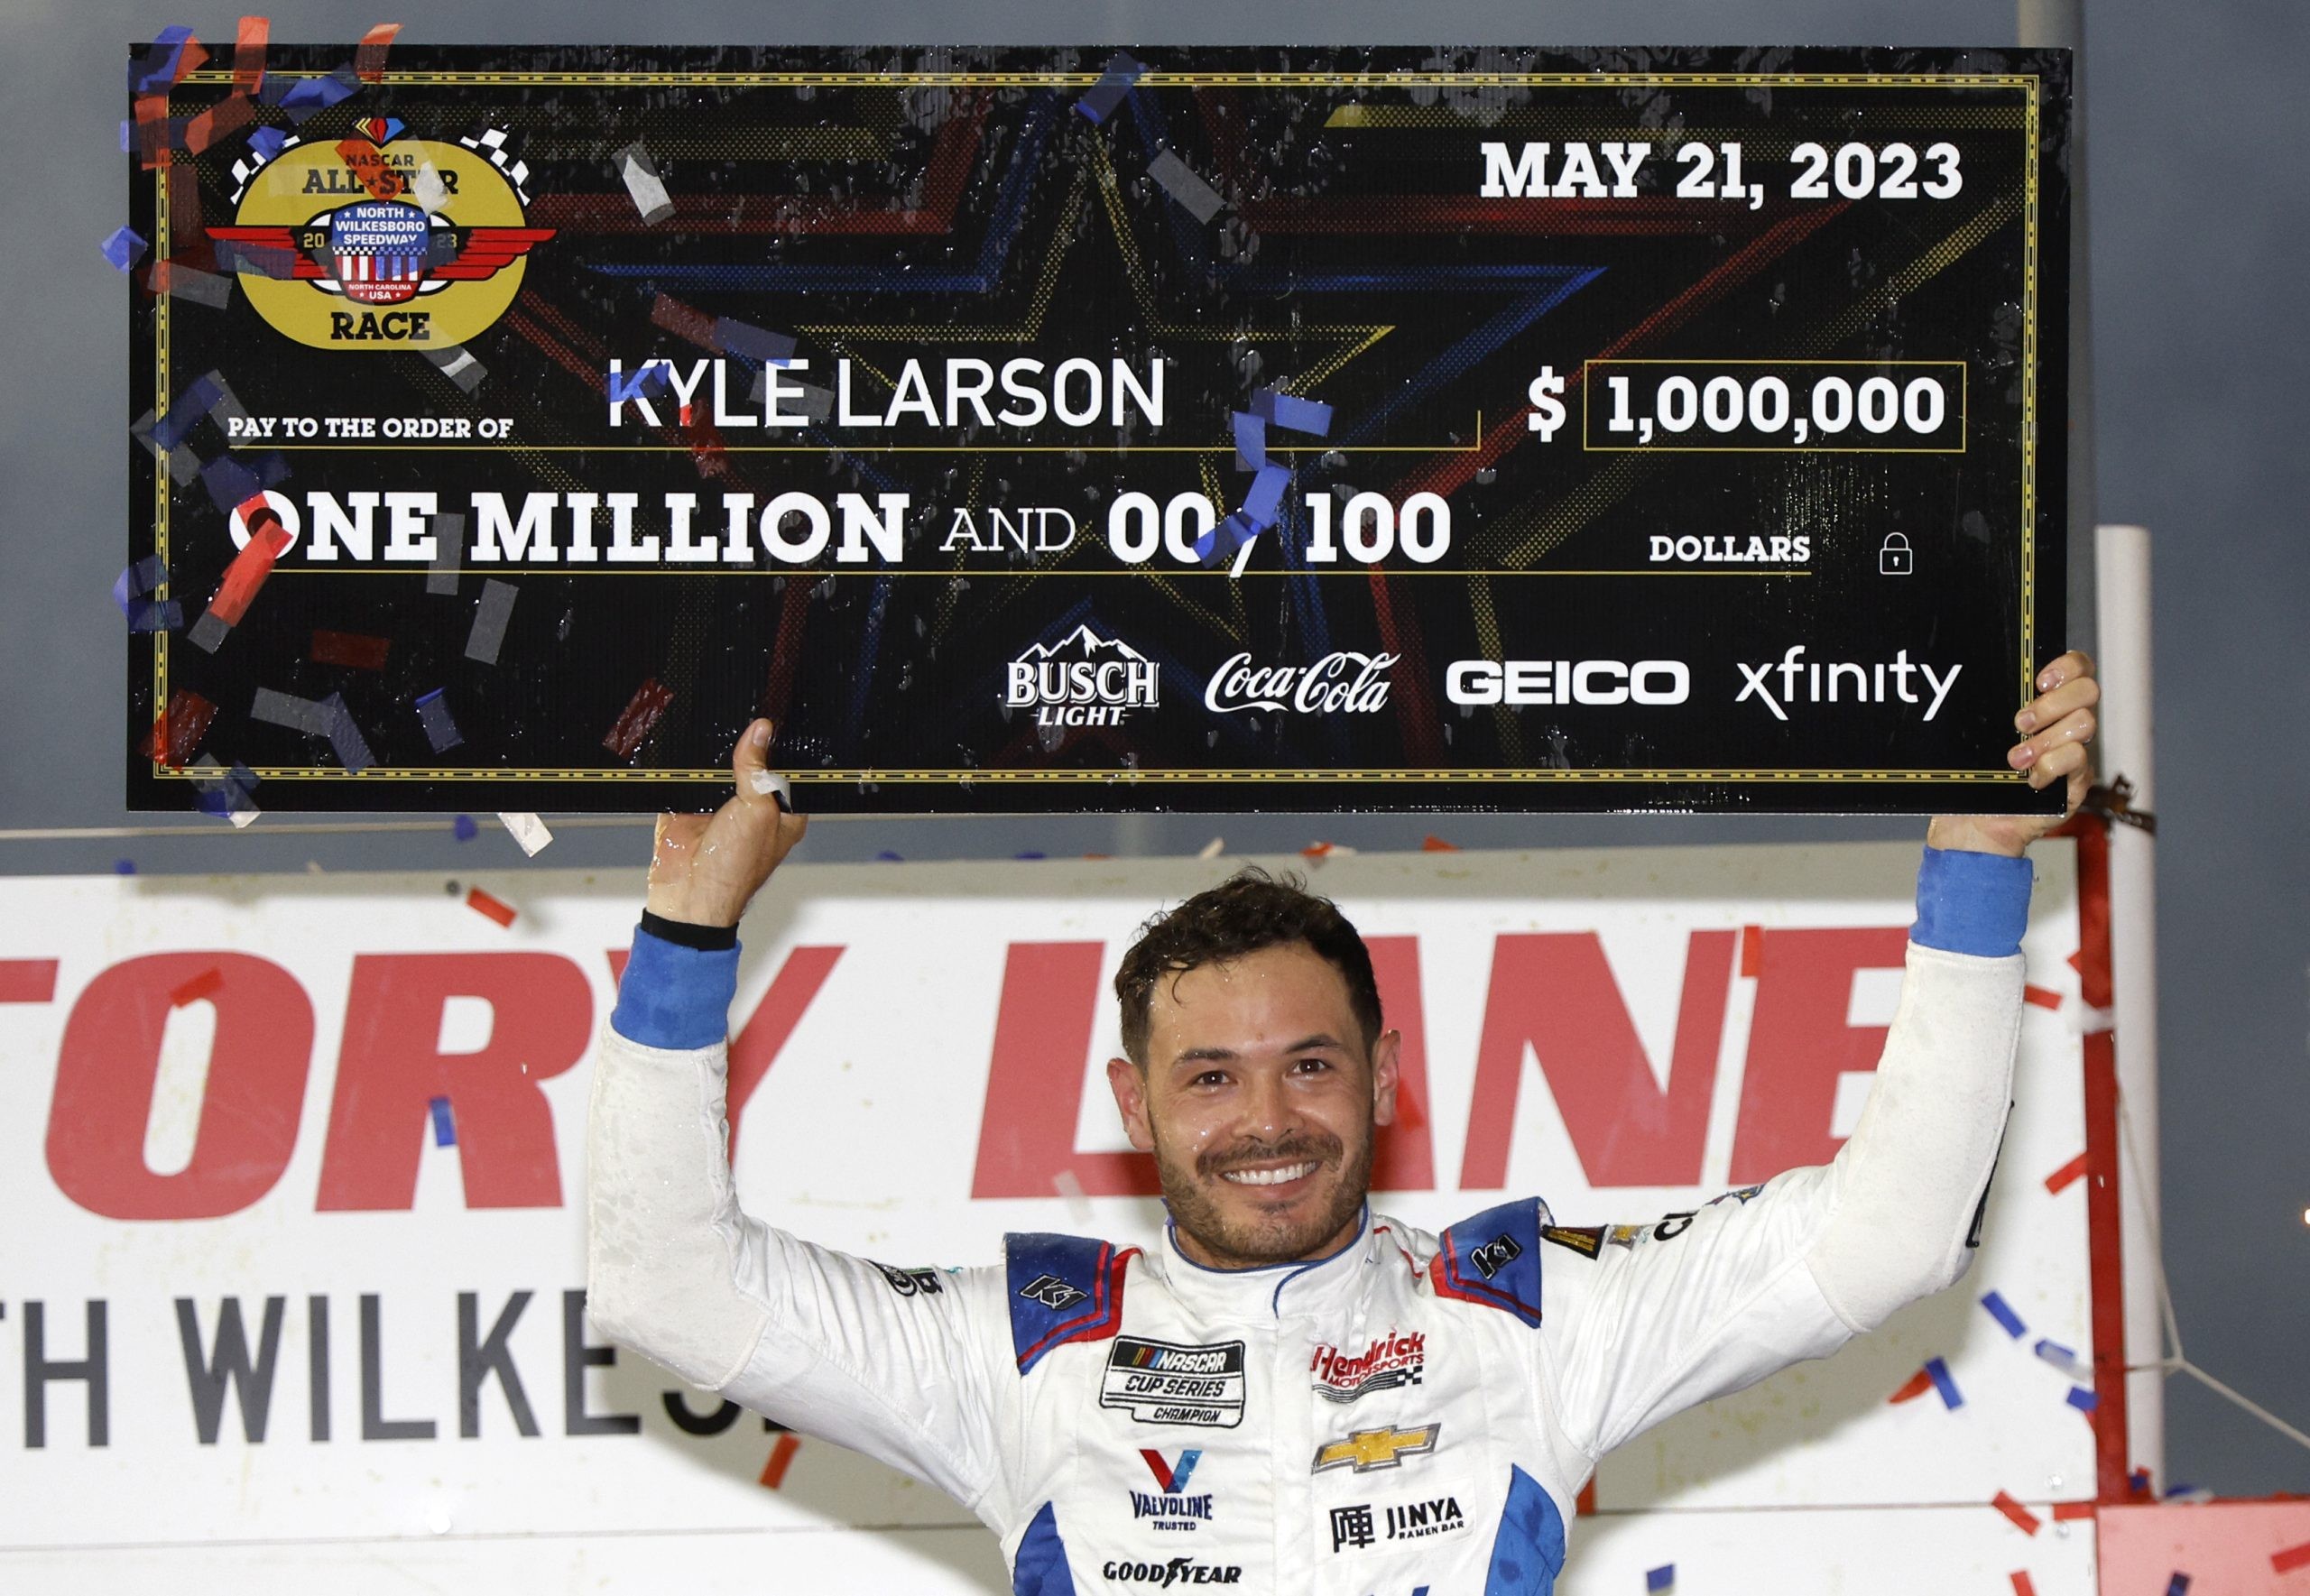 Local boy Larson wins $1M NASCAR All-Star Race at North Wilkesboro 